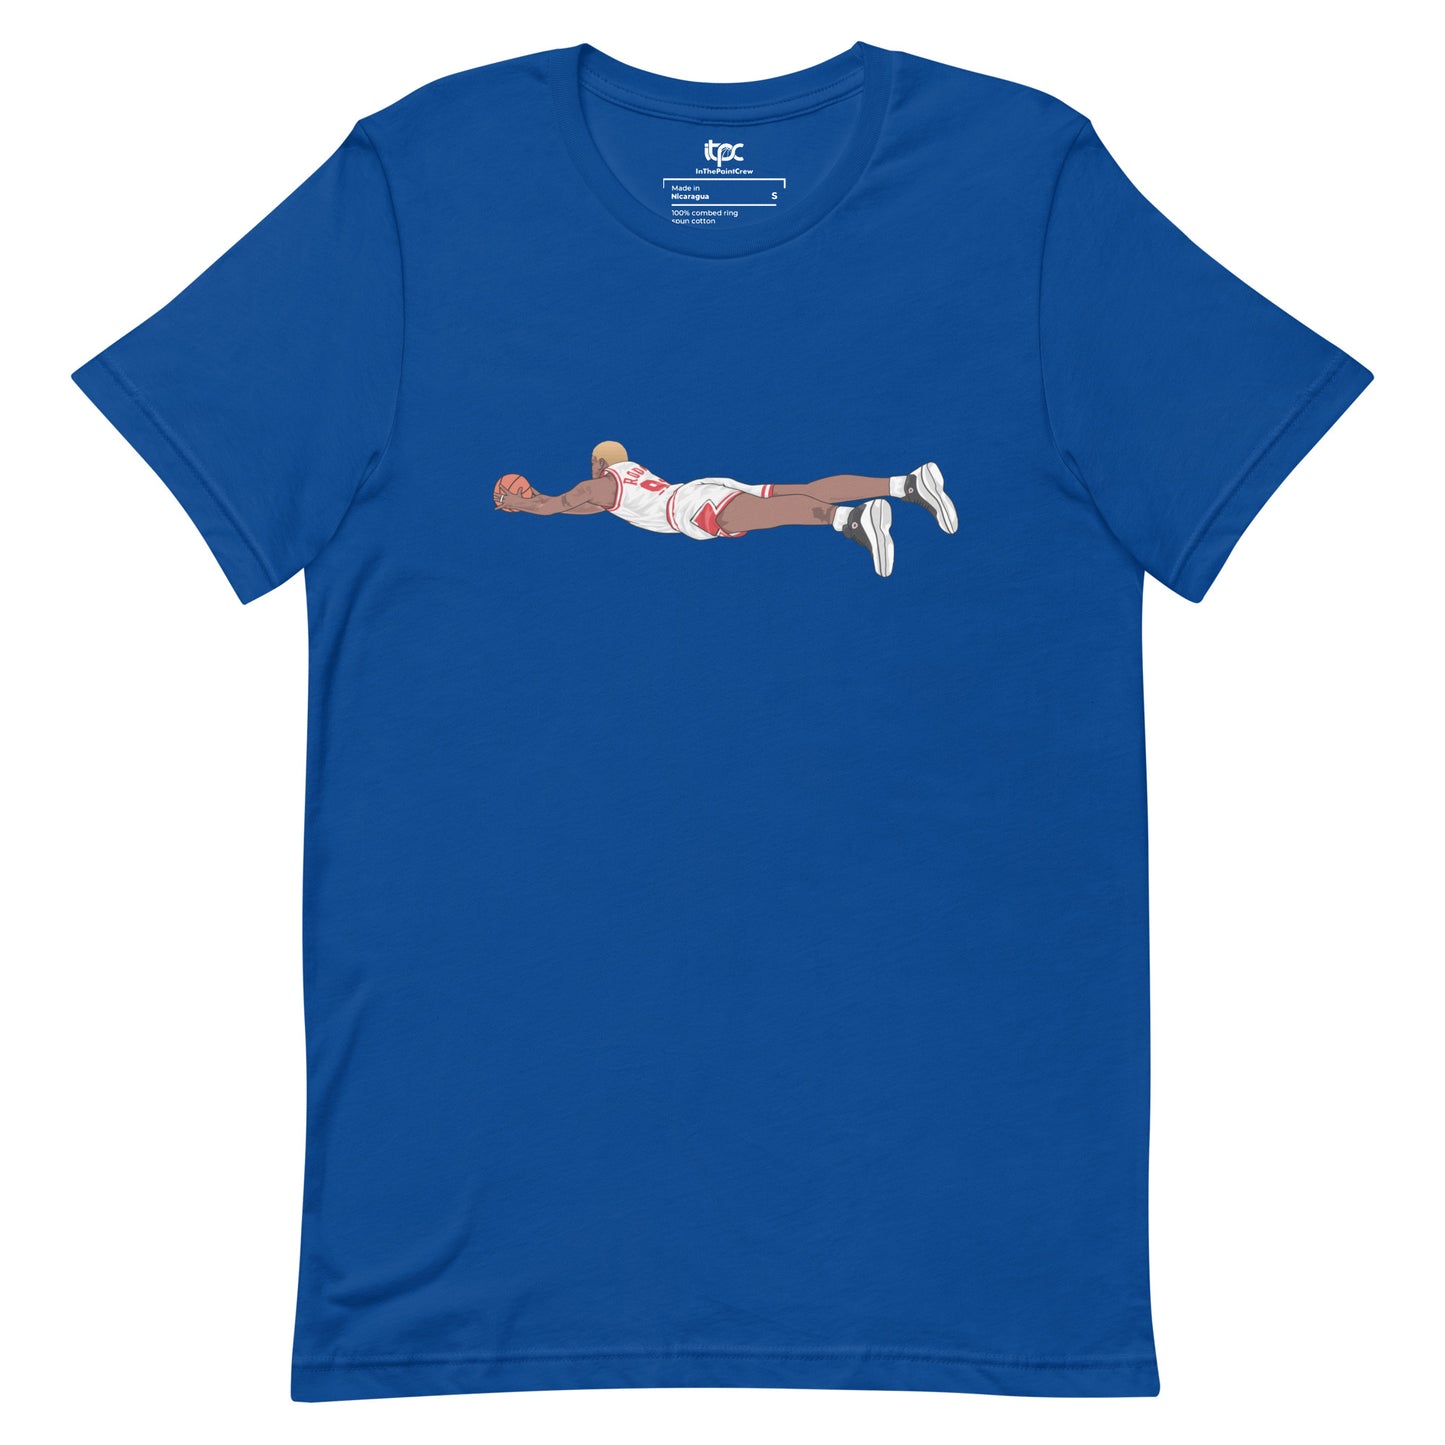 Dennis Rodman - "Full Extension" t-shirt